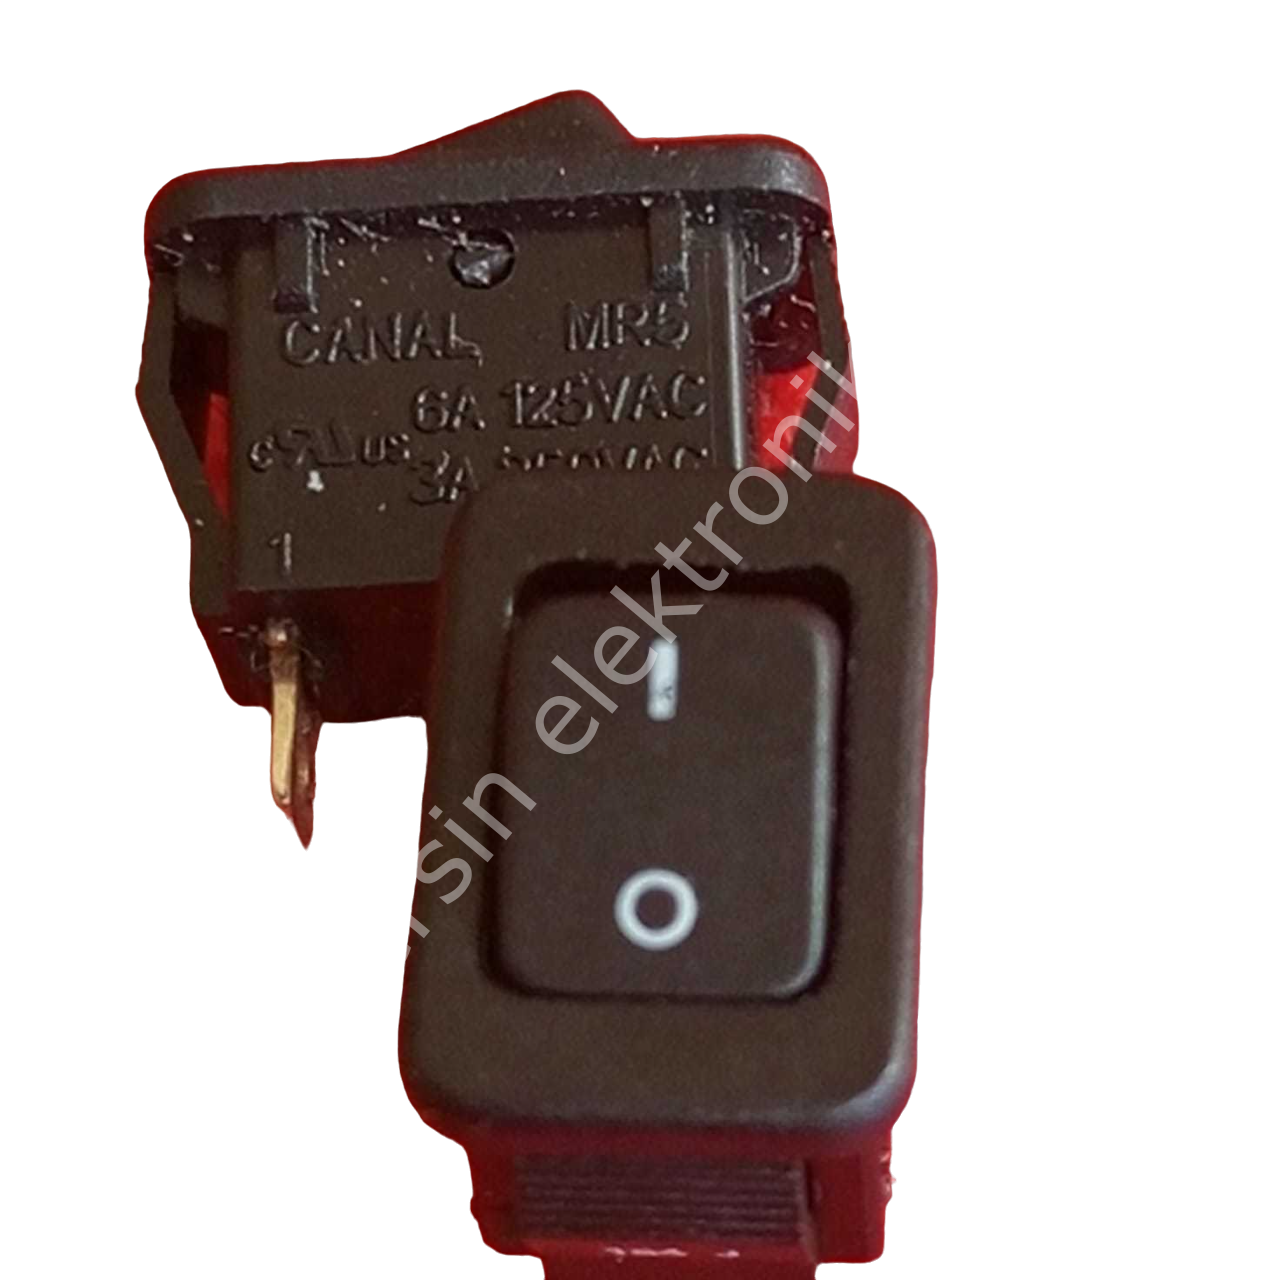 Yaylı Minyatür Anahtar 6A 125V AC 3A 250VAC  (Uzunluk:14mm Kalınlık:8 Yükseklik:10mm) (İki Pinli) (Canal MR-5) (51)